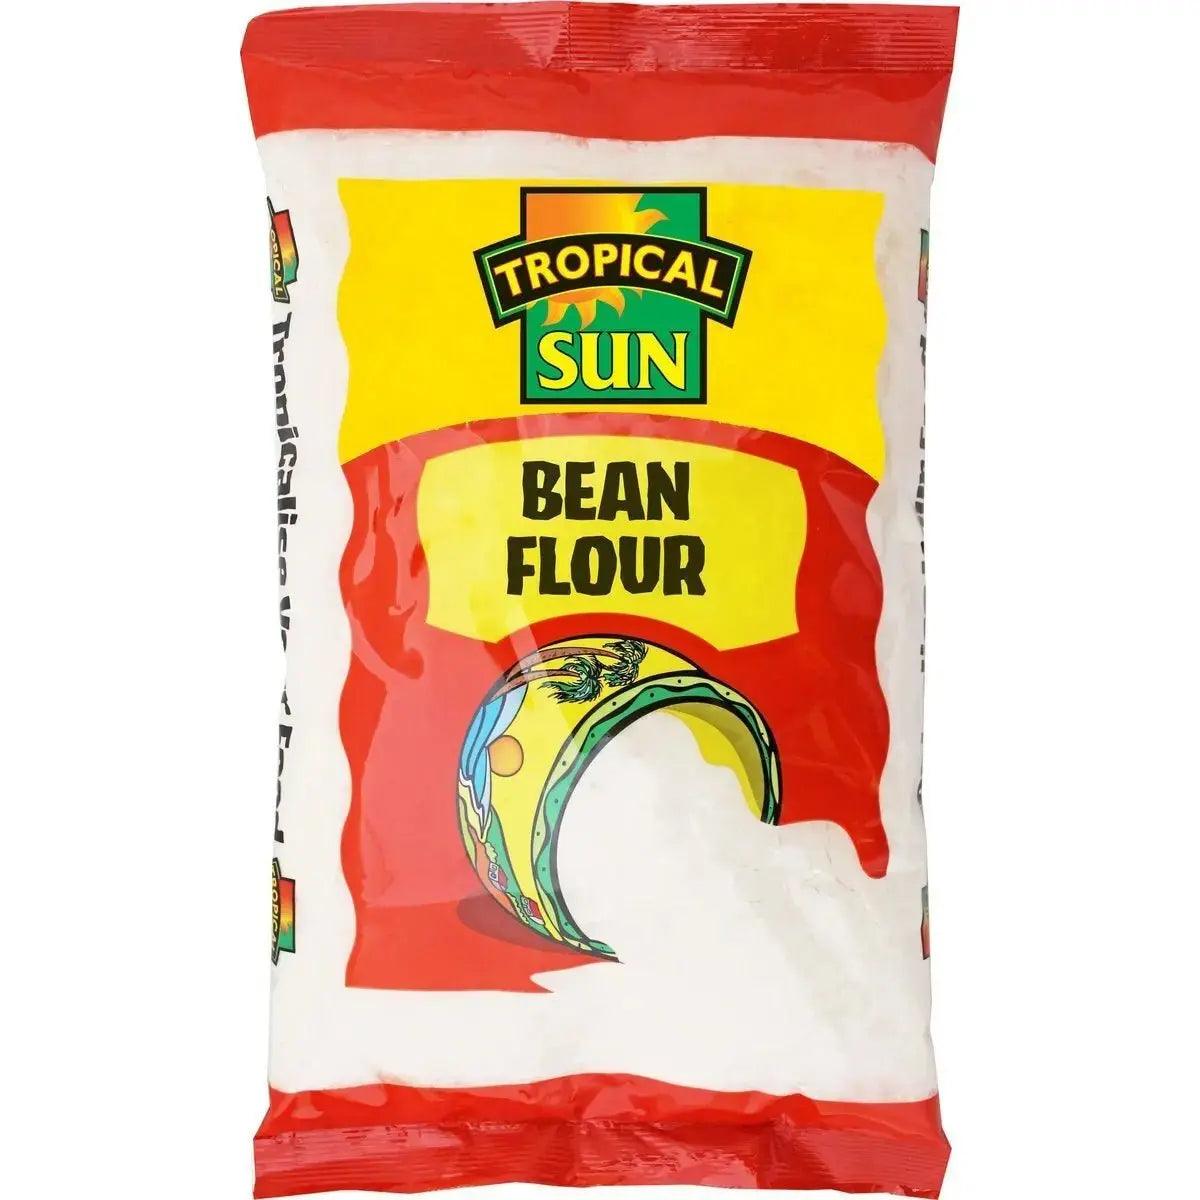 Tropical Sun Bean Flour Fantastic for baking - Honesty Sales U.K